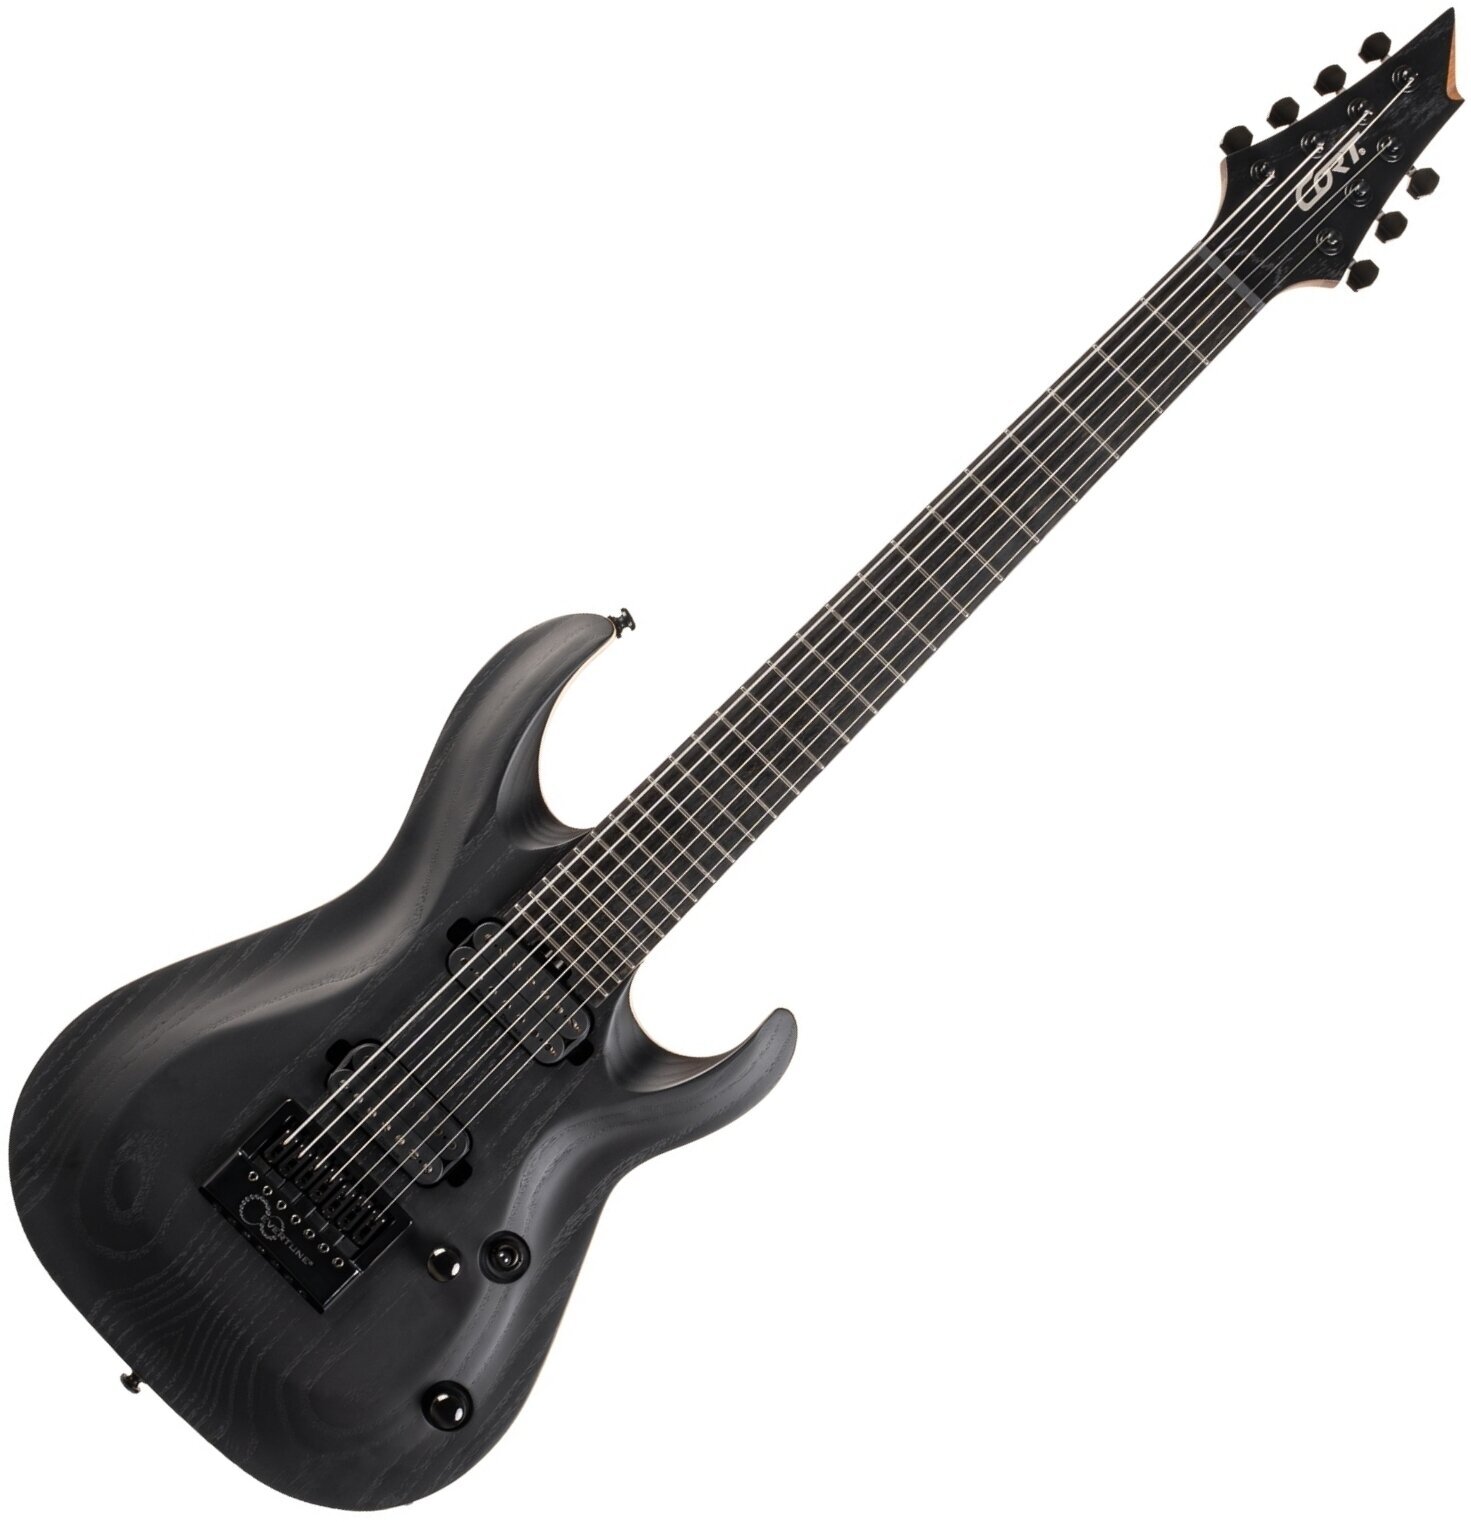 7-string Electric Guitar Cort KX707 Evertune Open Pore Black